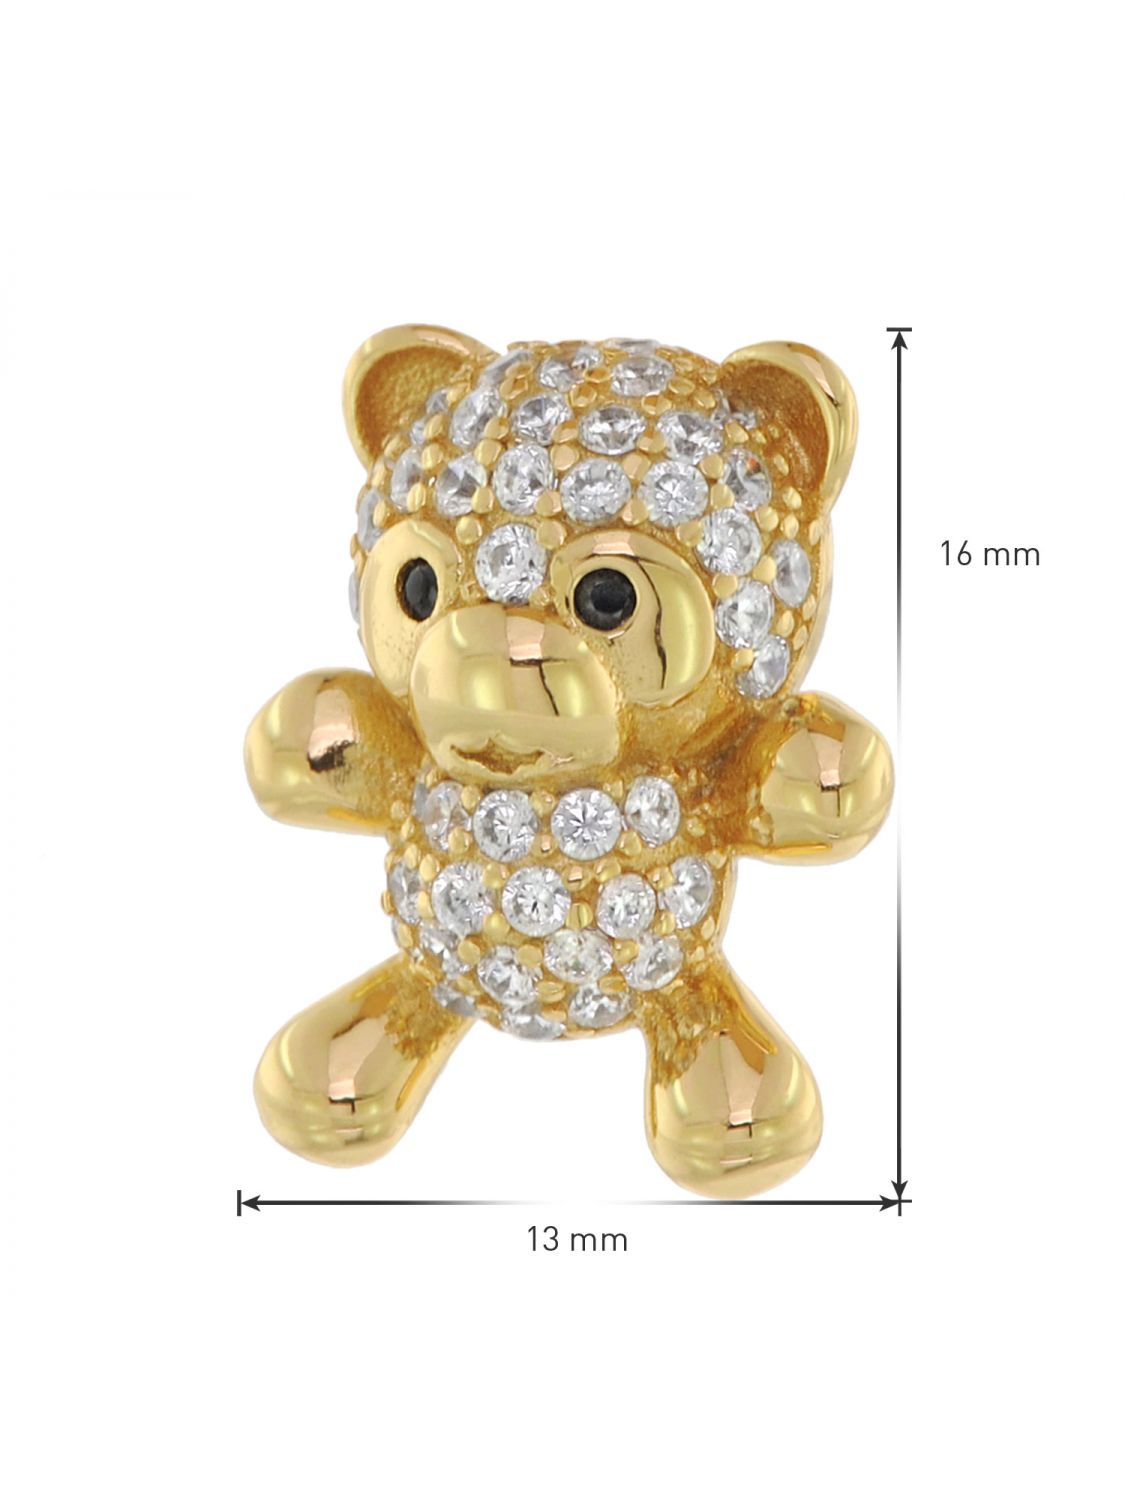 Teddy Bear Heart Photo Locket for Girls Pendant Necklace 16